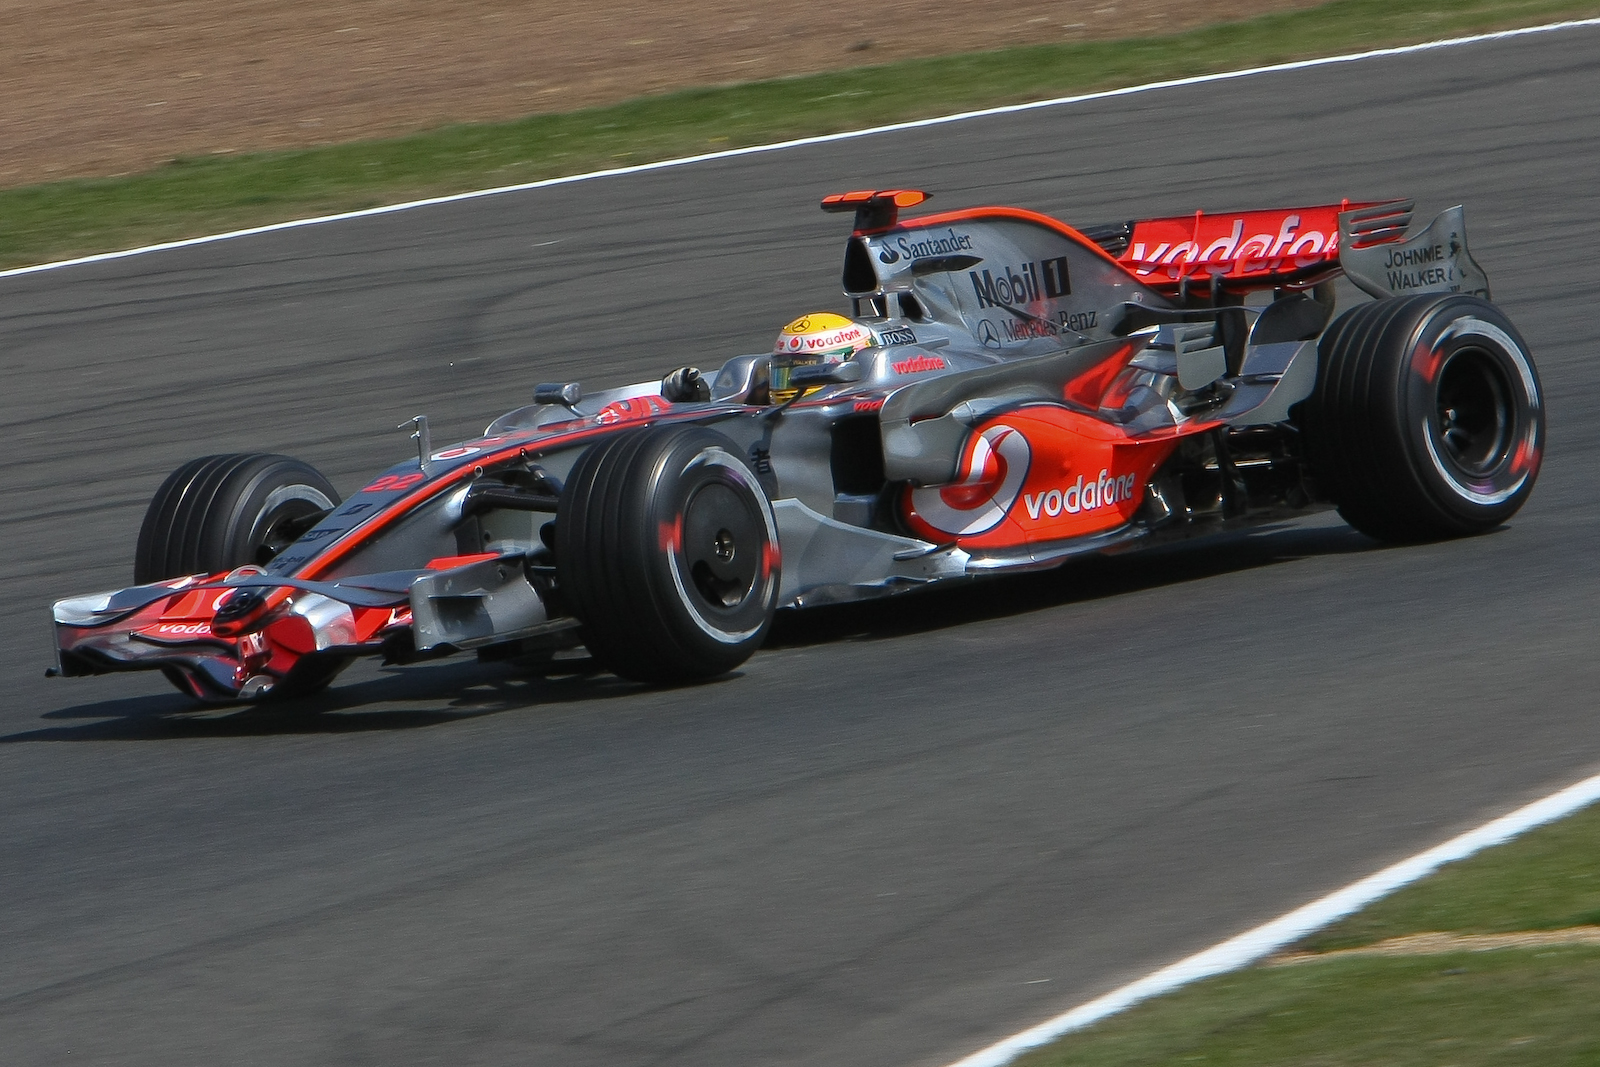 2008 f1 season